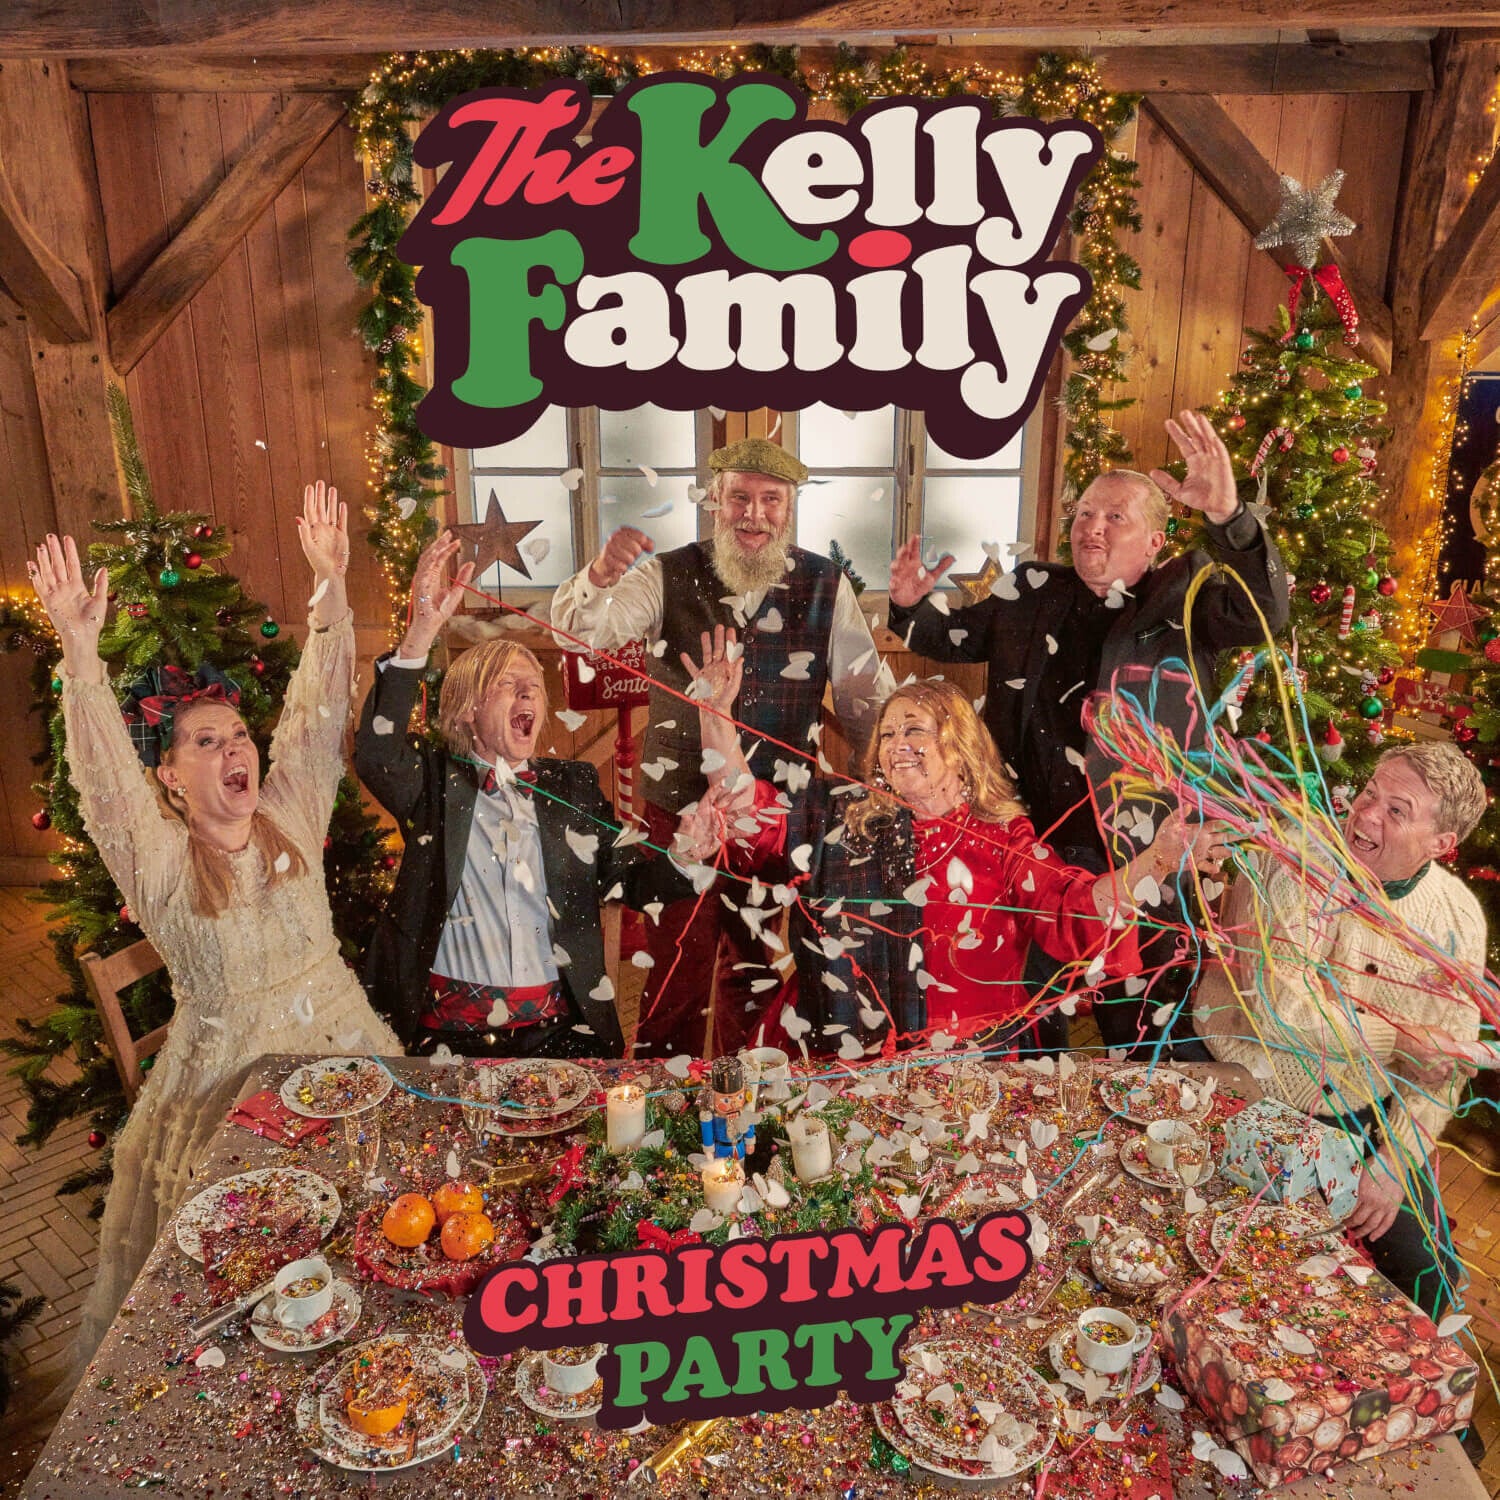 https://images.bravado.de/prod/product-assets/product-asset-data/kelly-family-the/kelly-family/products/143388/web/324954/image-thumb__324954__3000x3000_original/The-Kelly-Family-Christmas-Party-Vinyl-143388-324954.931cbd3e.jpg